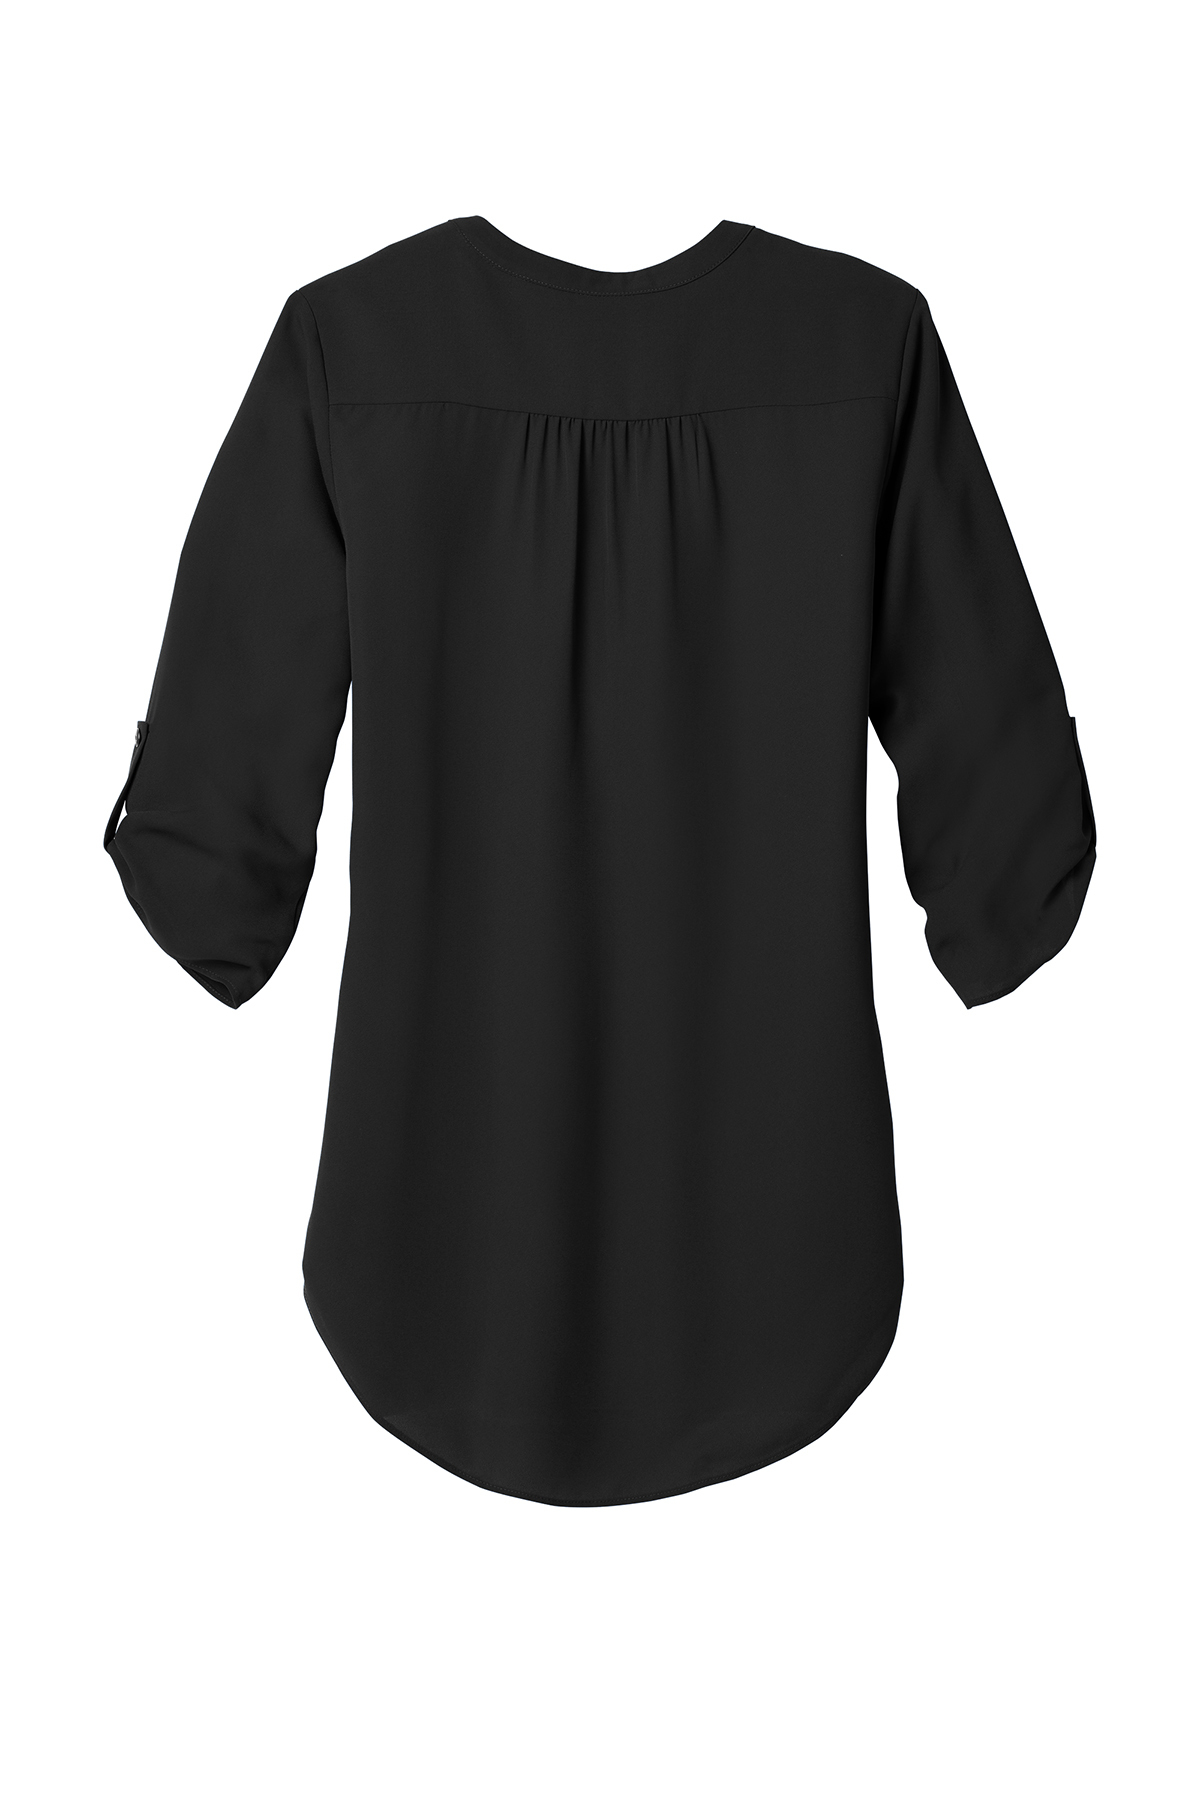 Brasserie women 3/4 sleeve top shirt blouse, 203W028